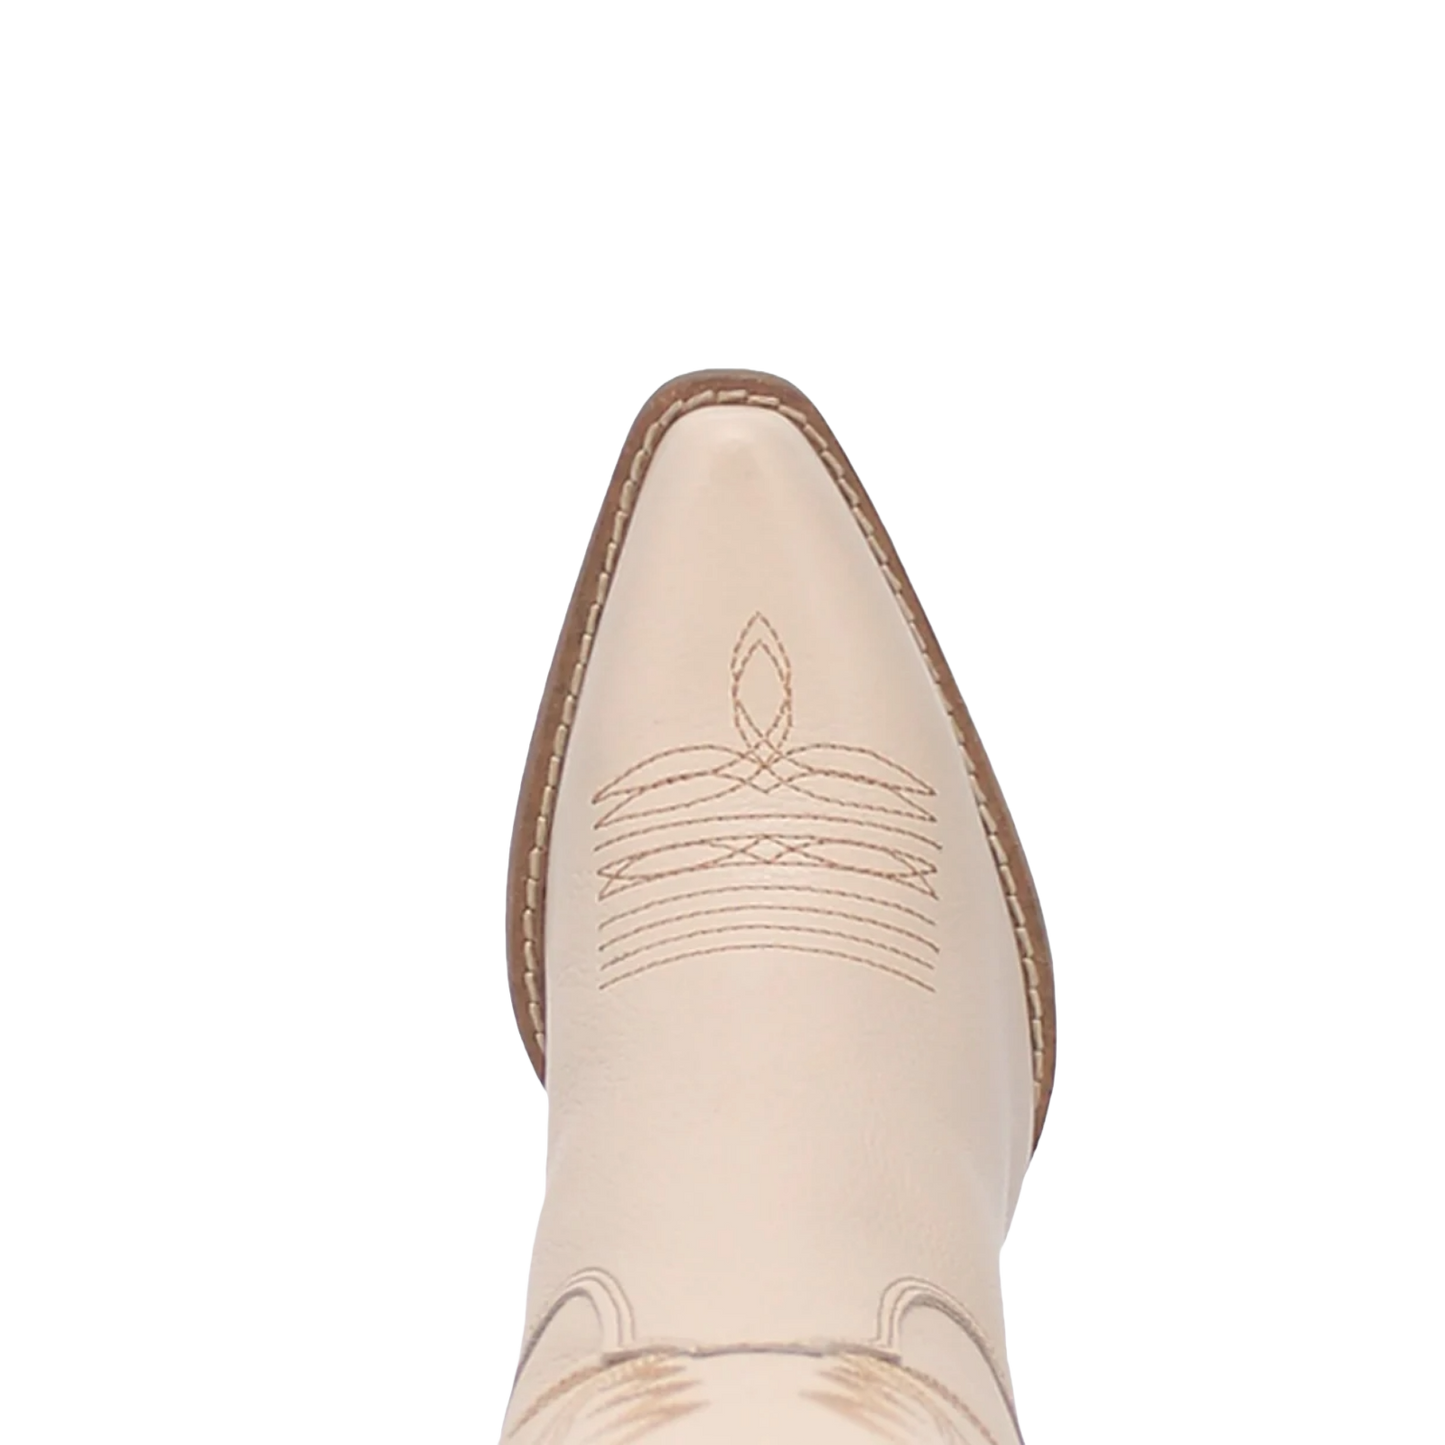 Dingo Ladies High Cotton Sand White Snip Toe Boots DI936-BN90